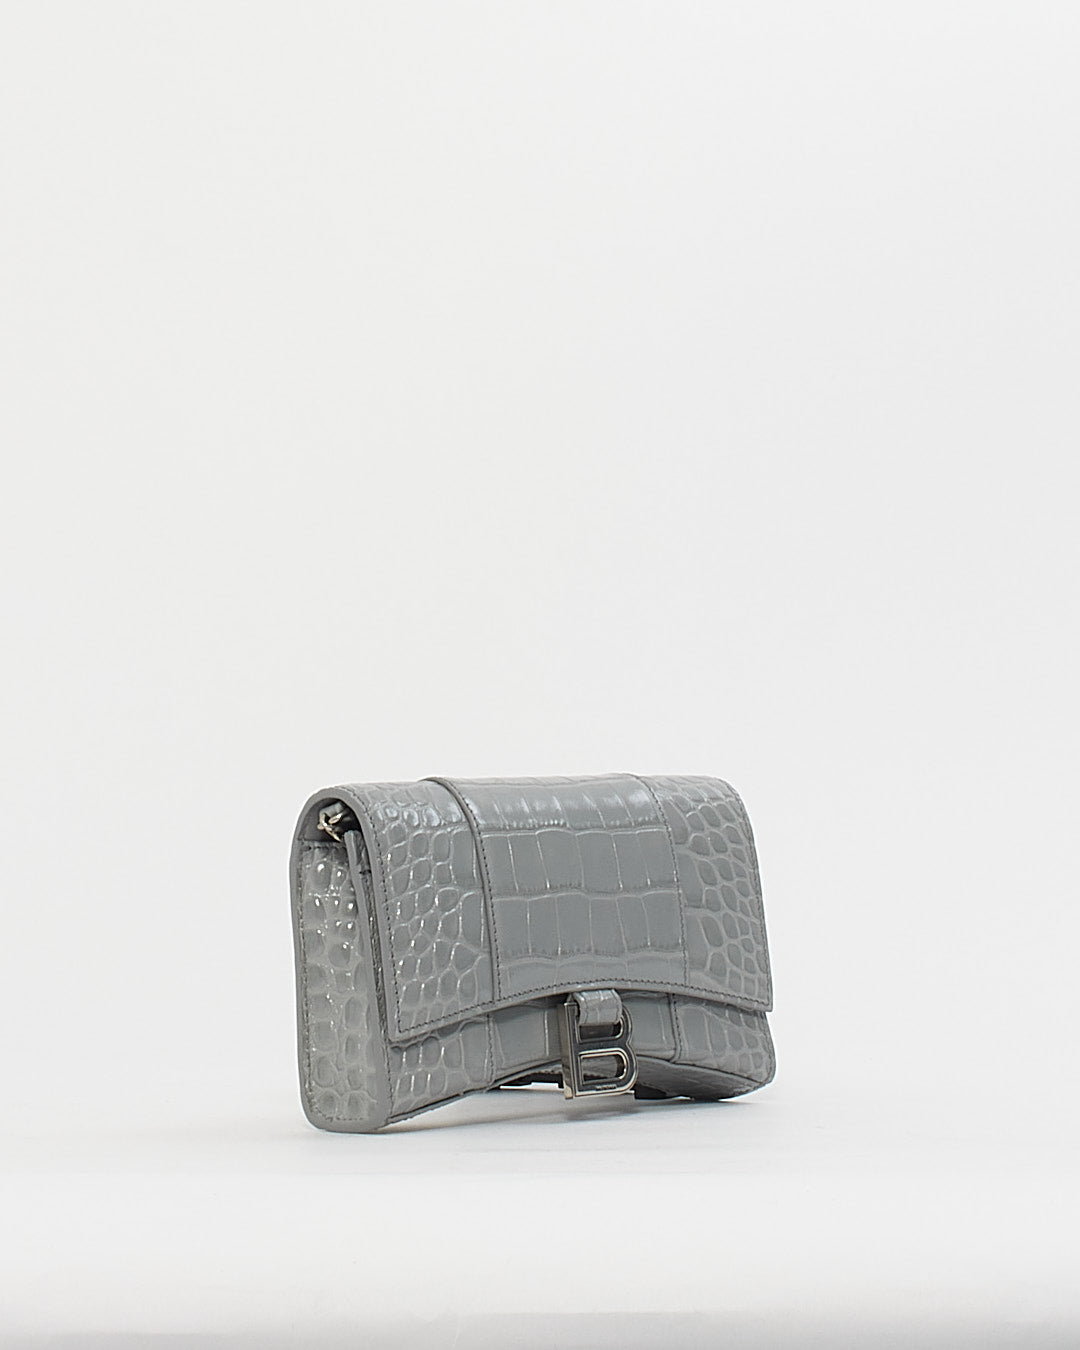 Balenciaga Sac à main portefeuille sur chaîne gris brillant en relief croco